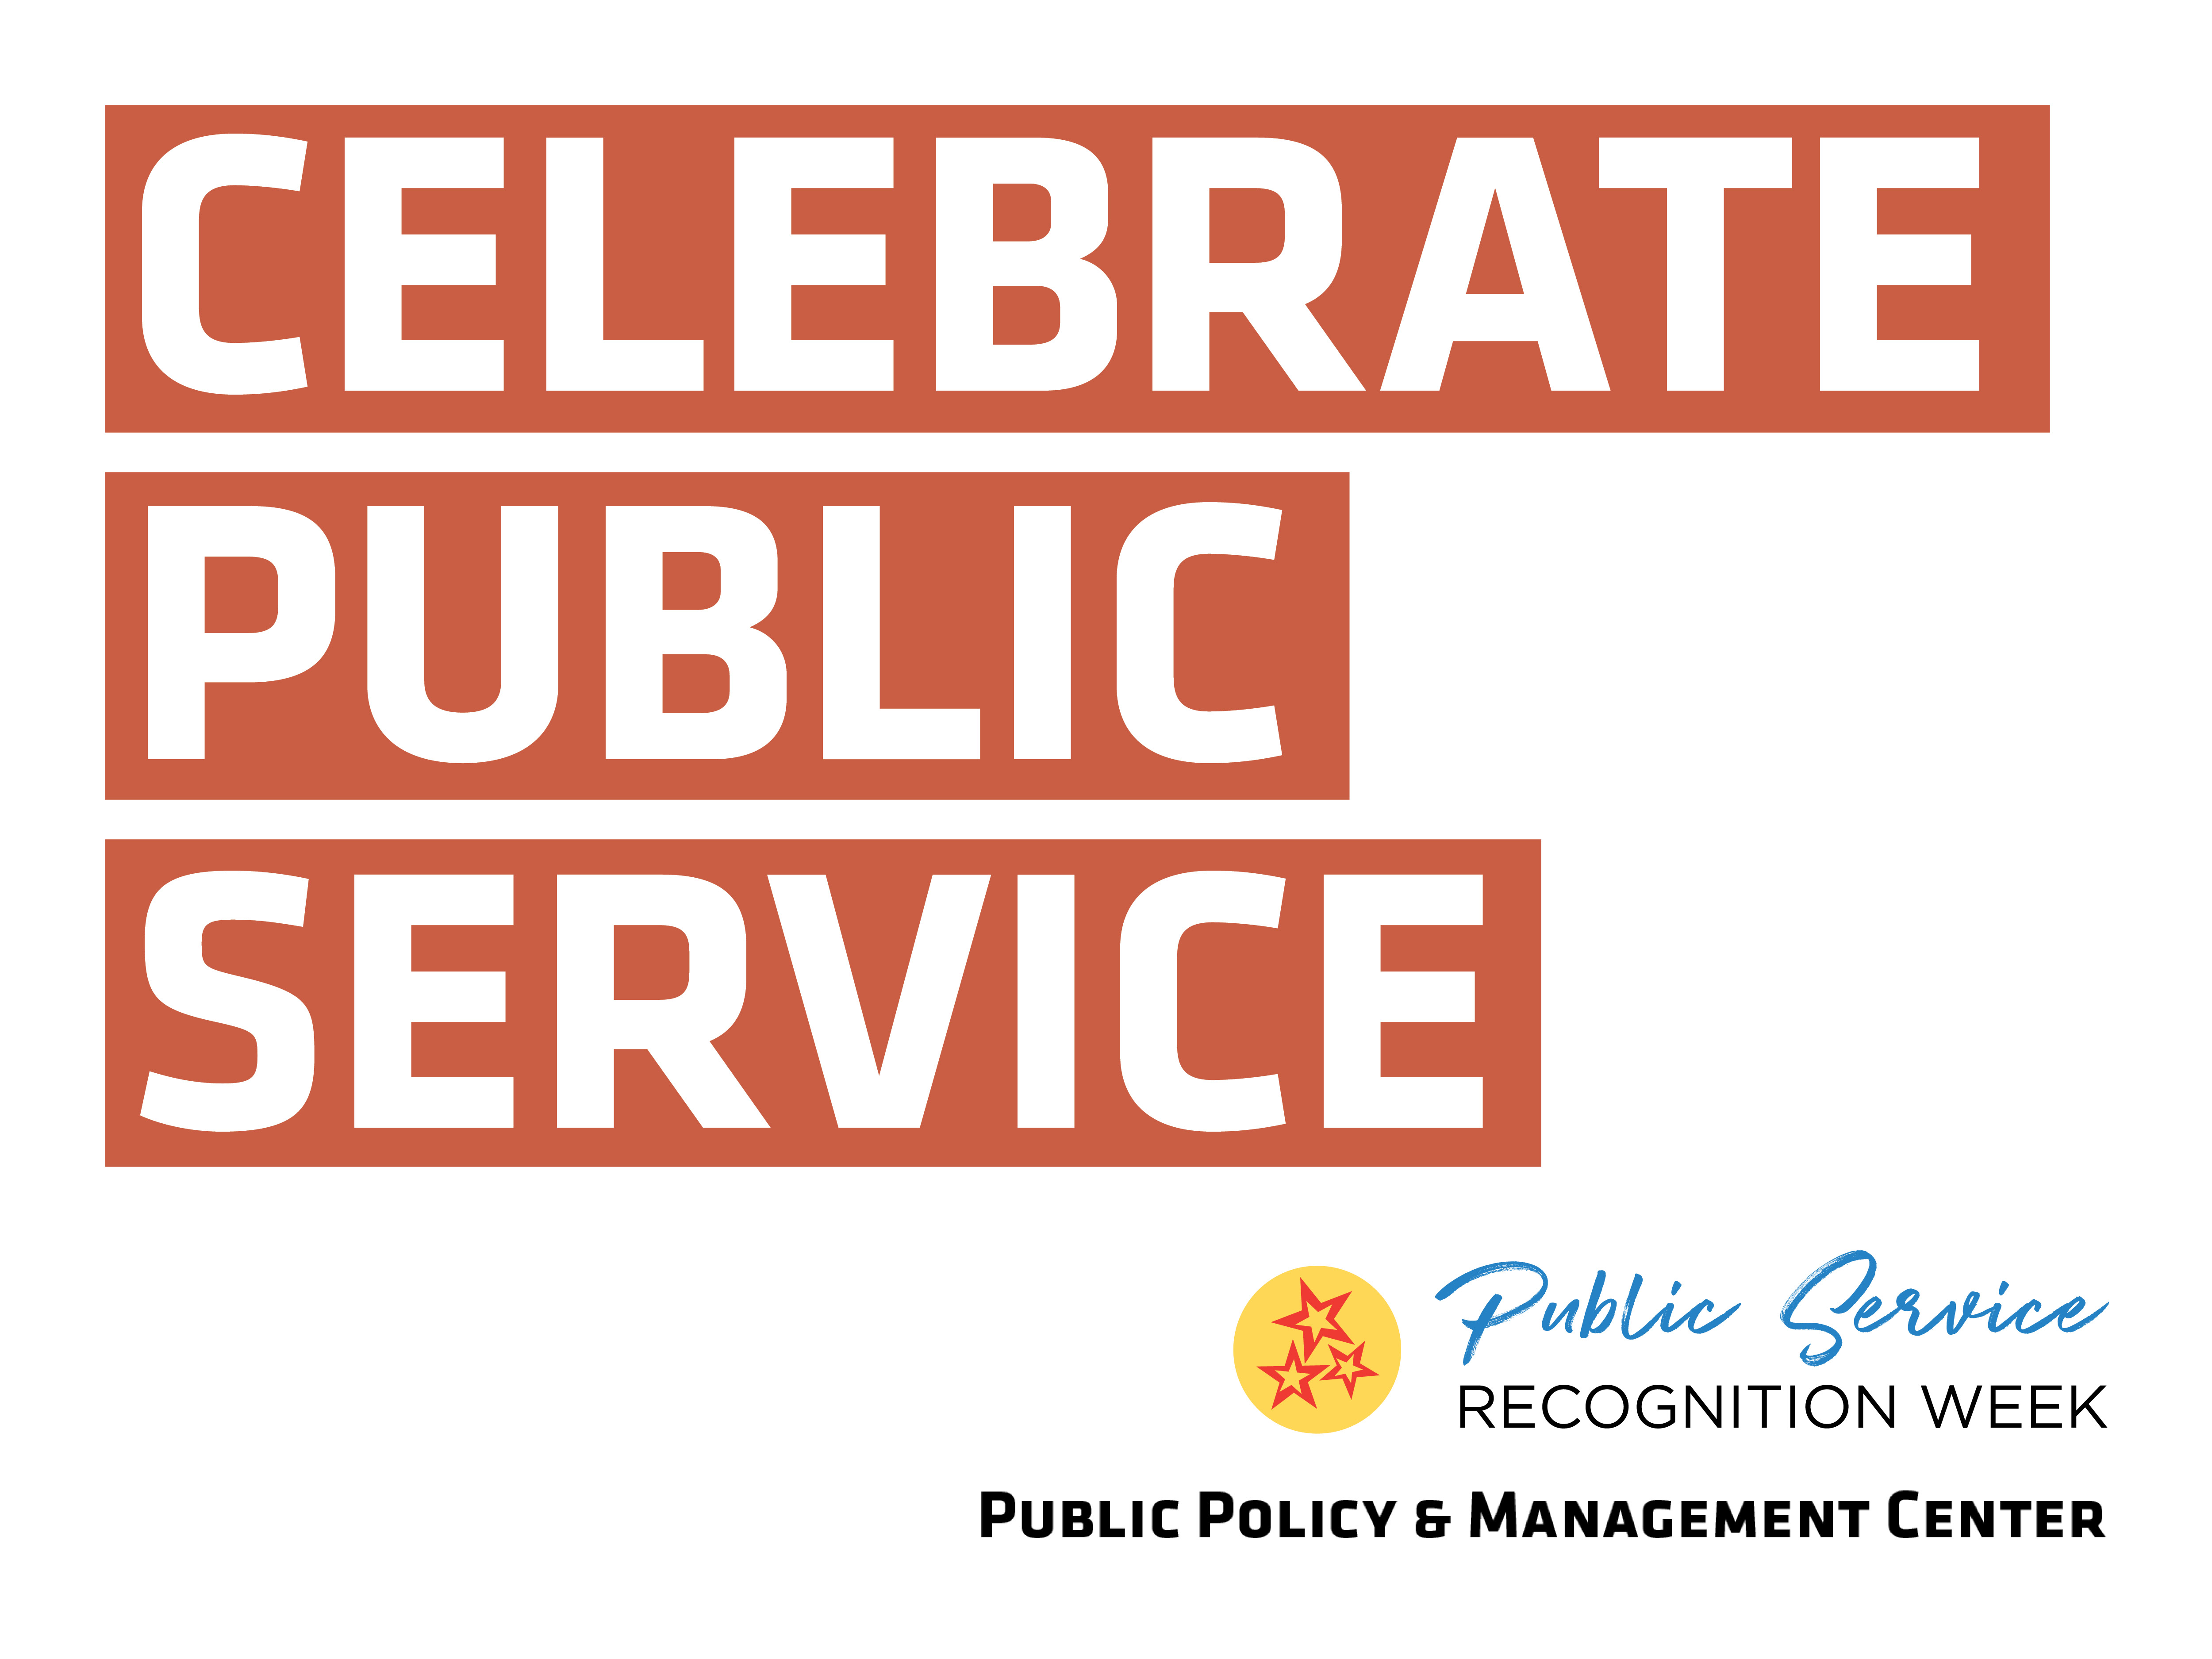 Celebrating Public Service